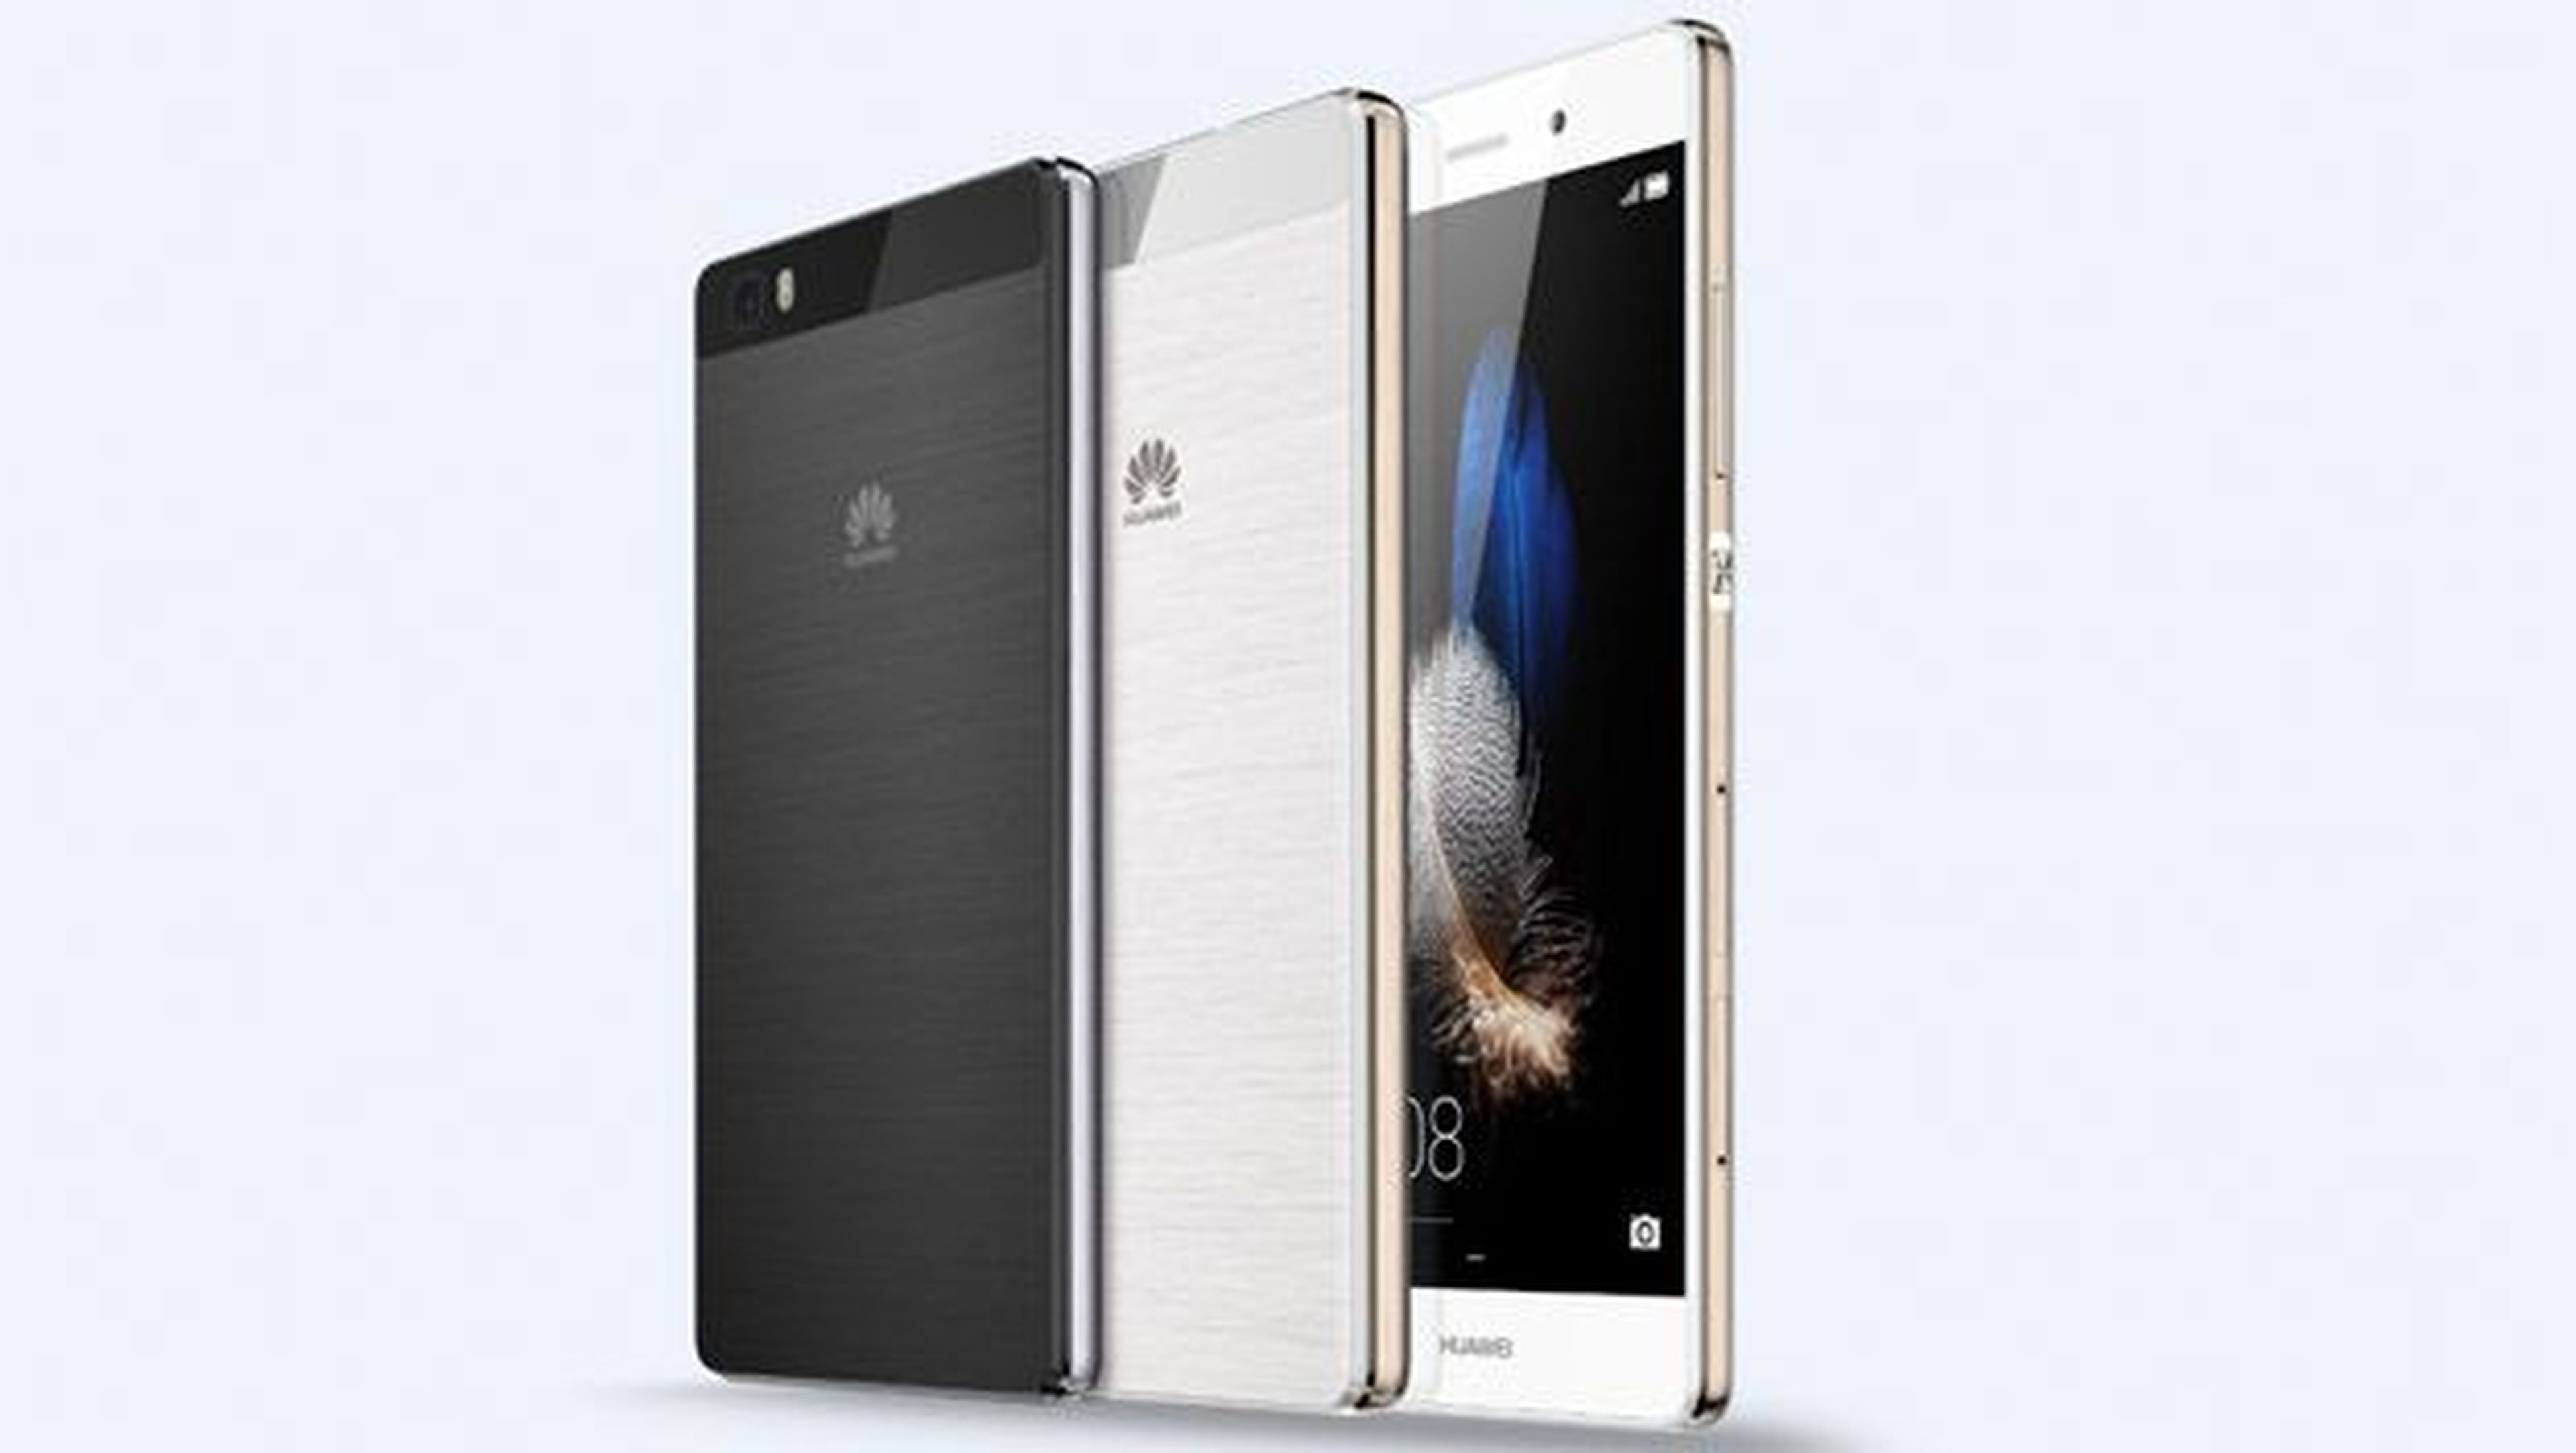 Huawei P8 Lite oferta móviles huawei